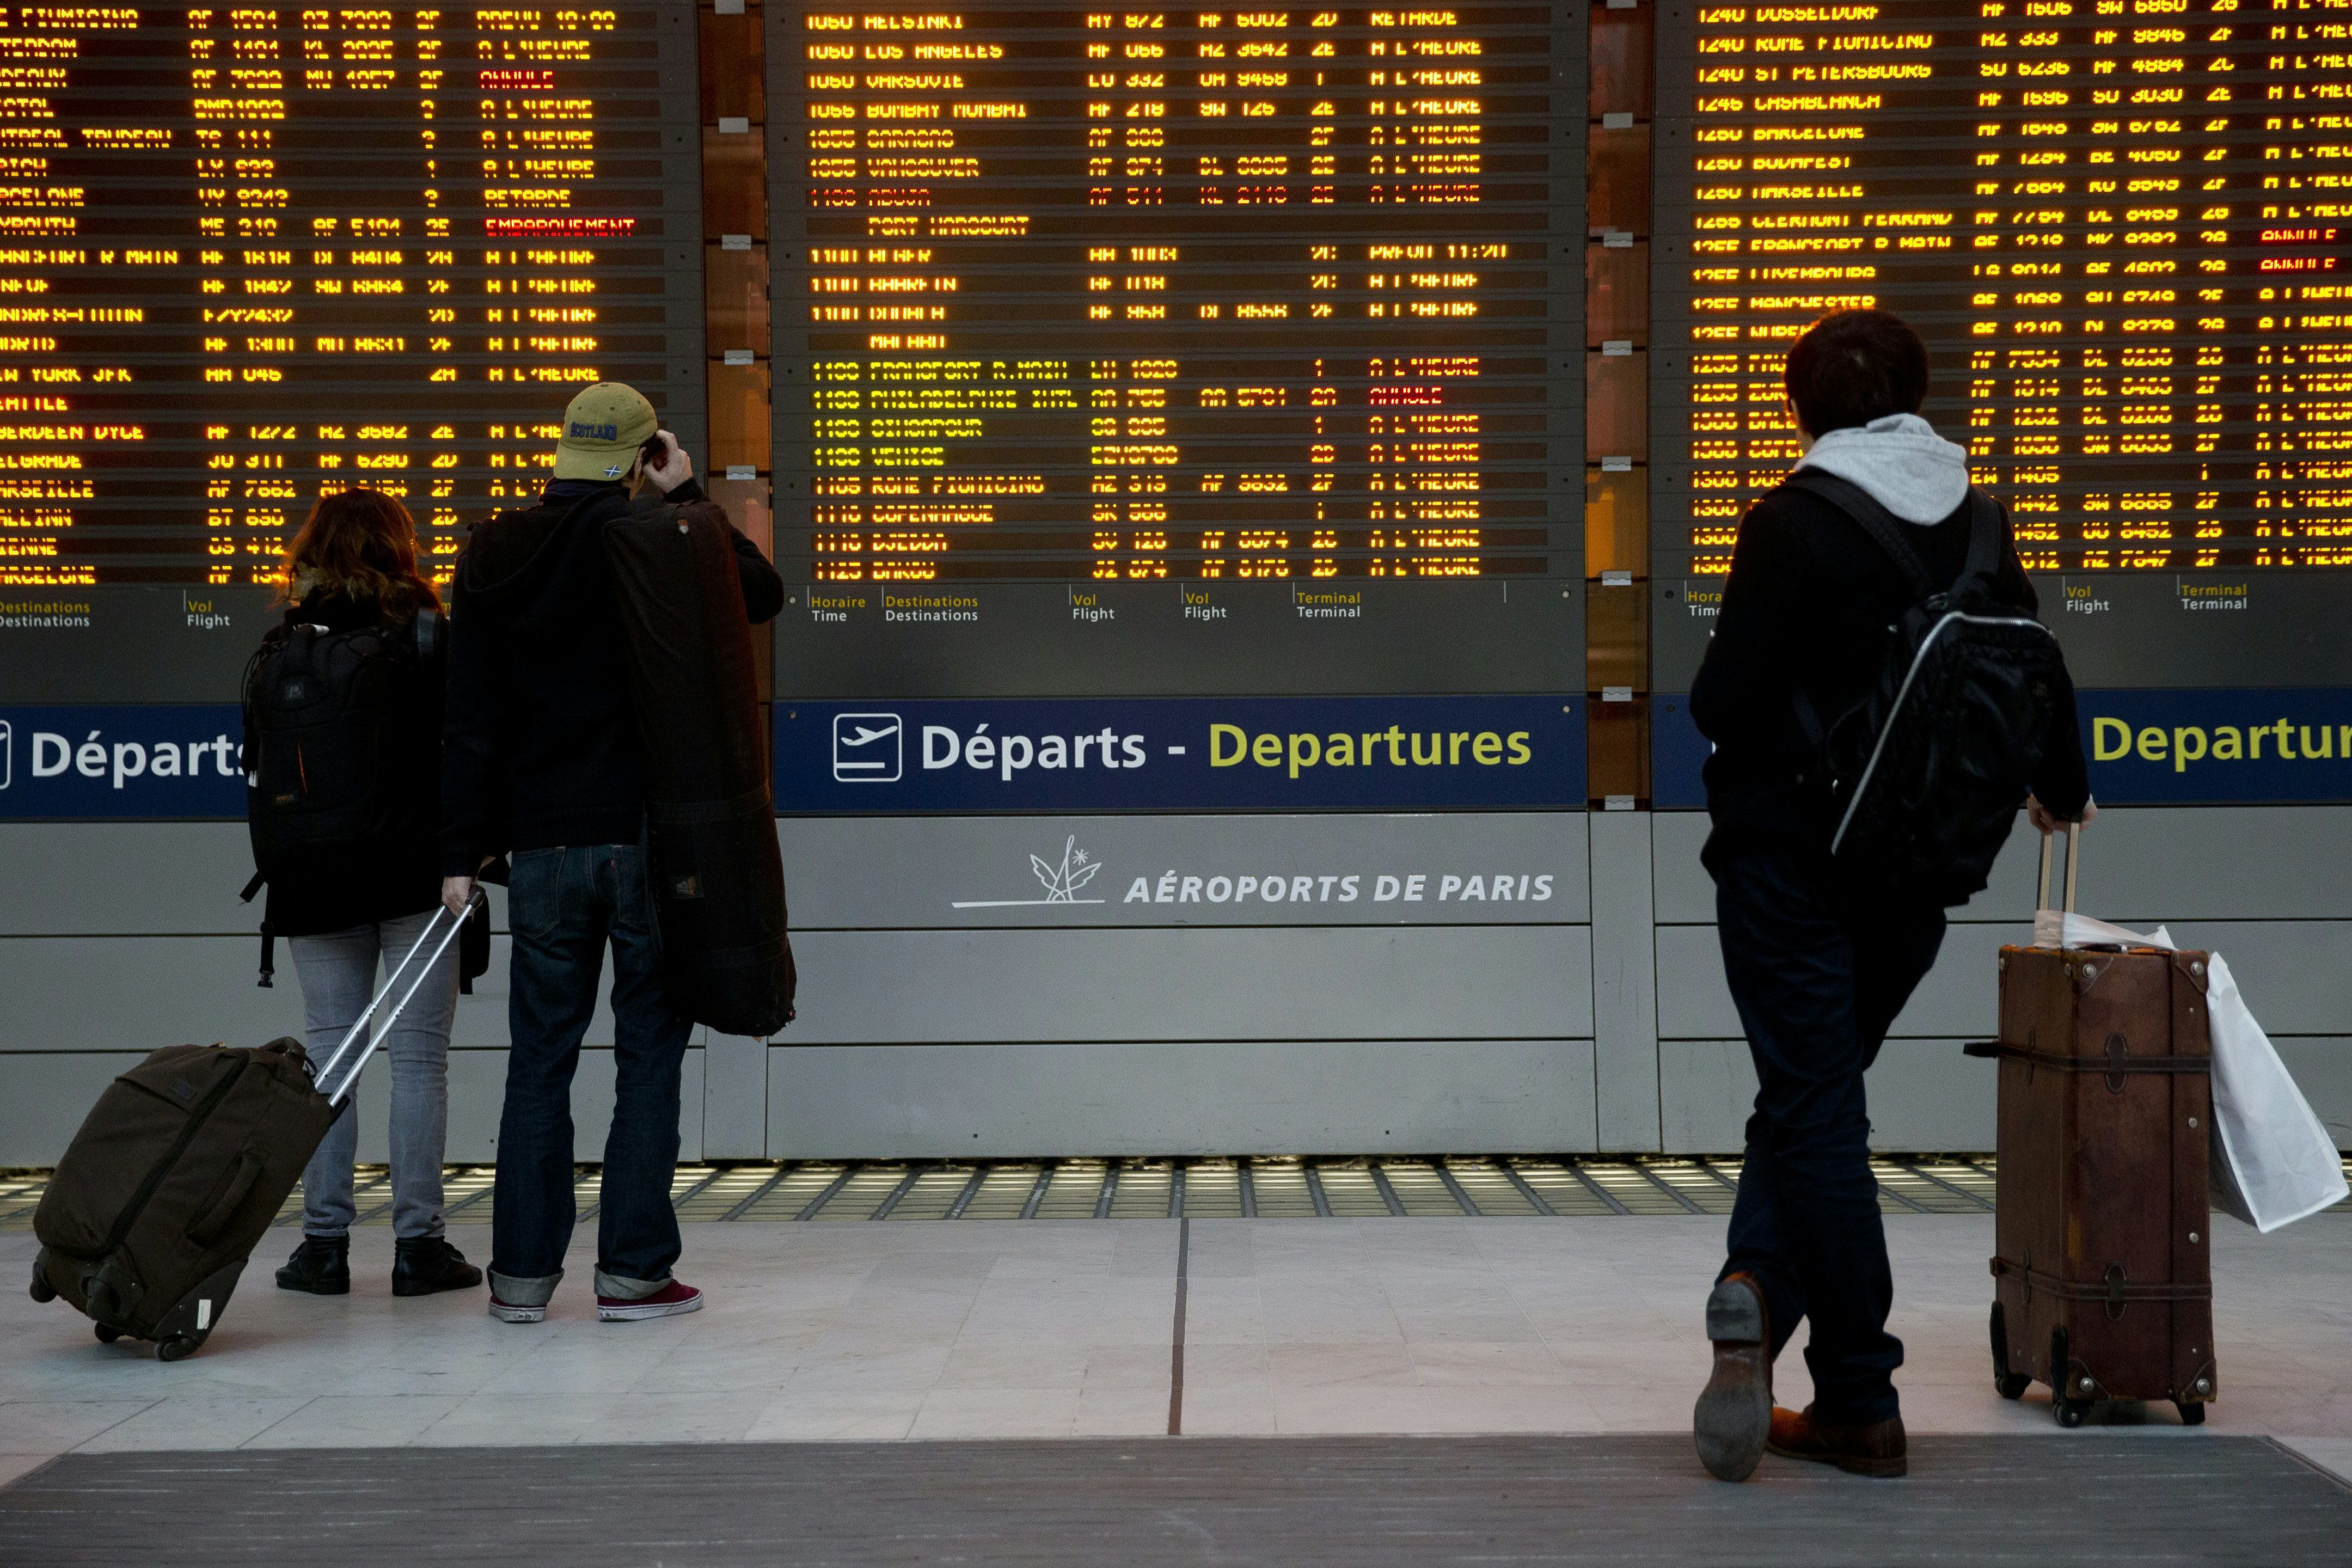 People in airport terminal looking at departures board